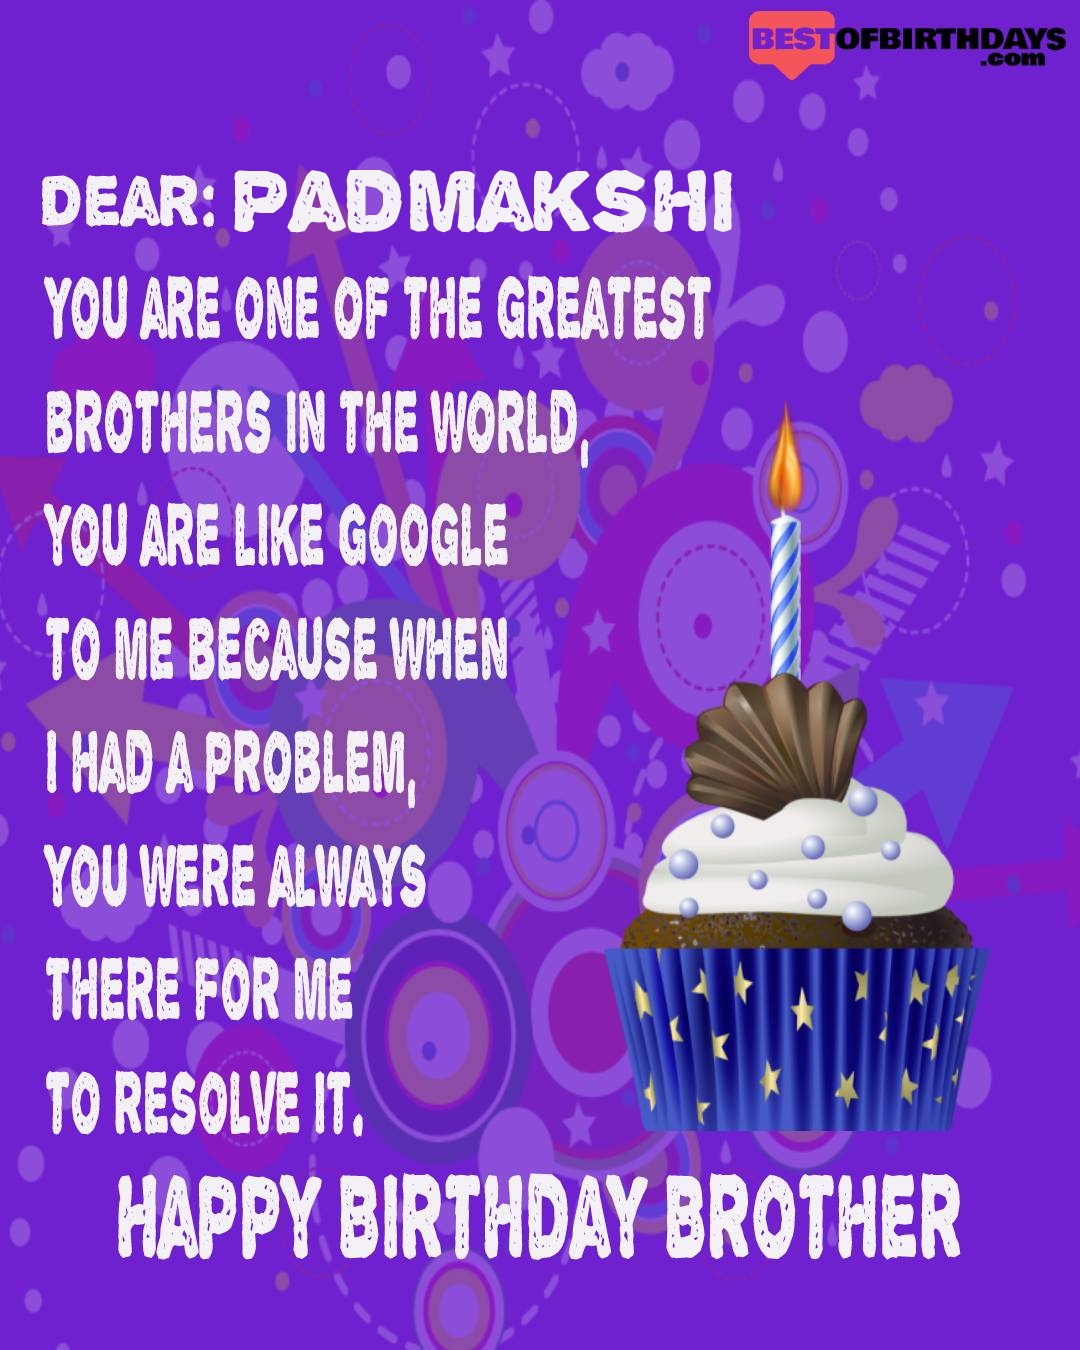 Happy birthday padmakshi bhai brother bro